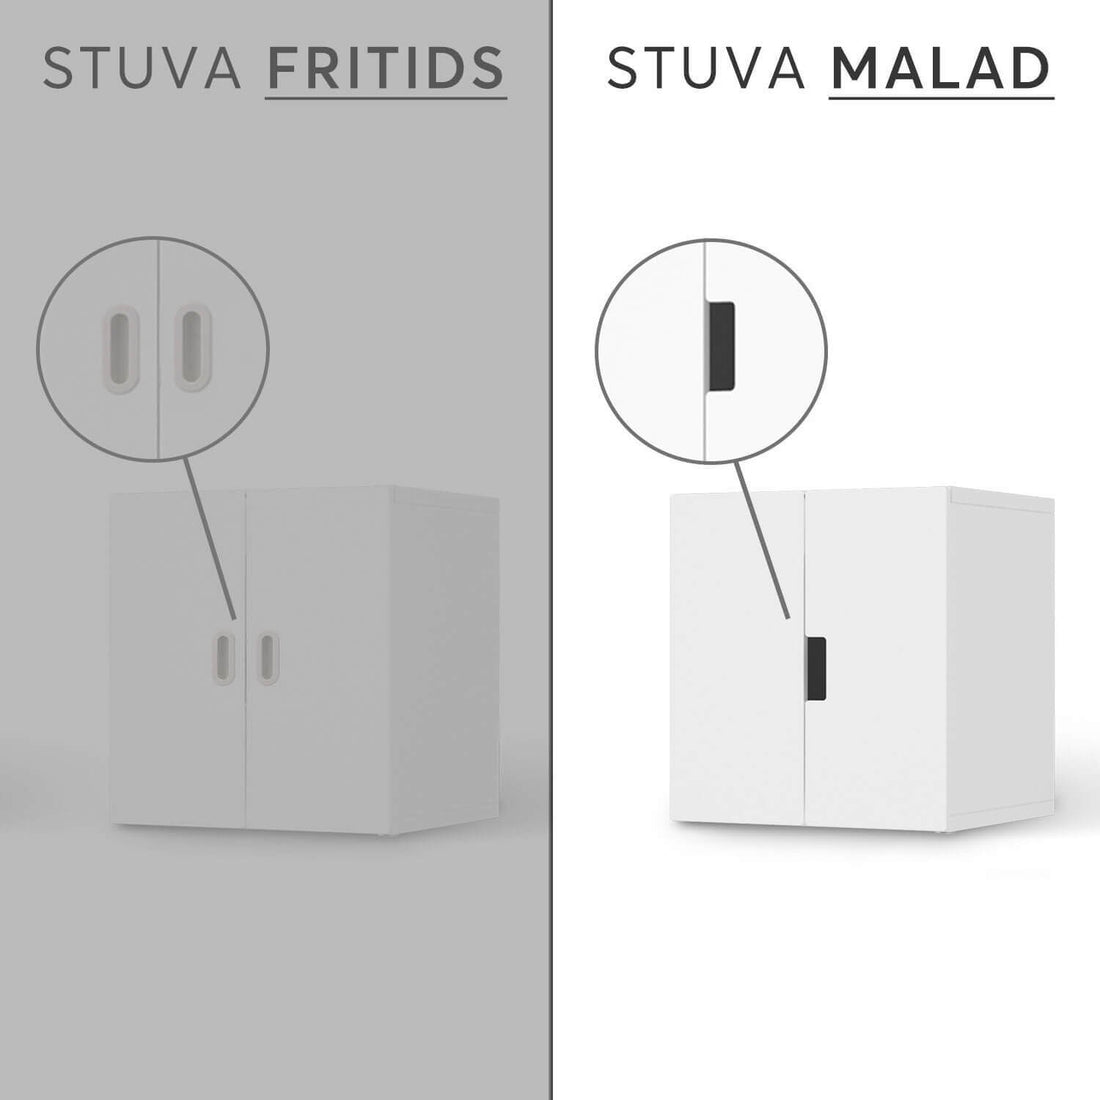 Vergleich IKEA Stuva Malad / Fritids - Flying Animals